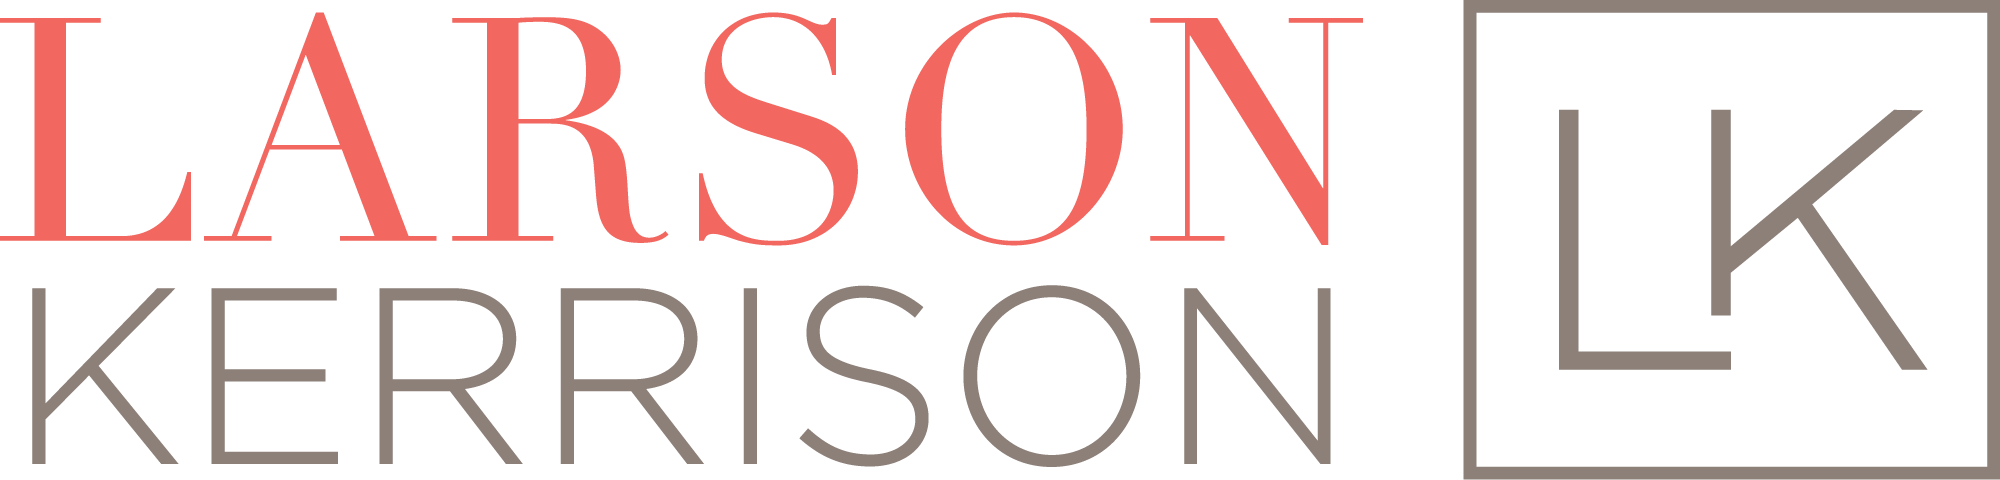 Larson Kerrison logo